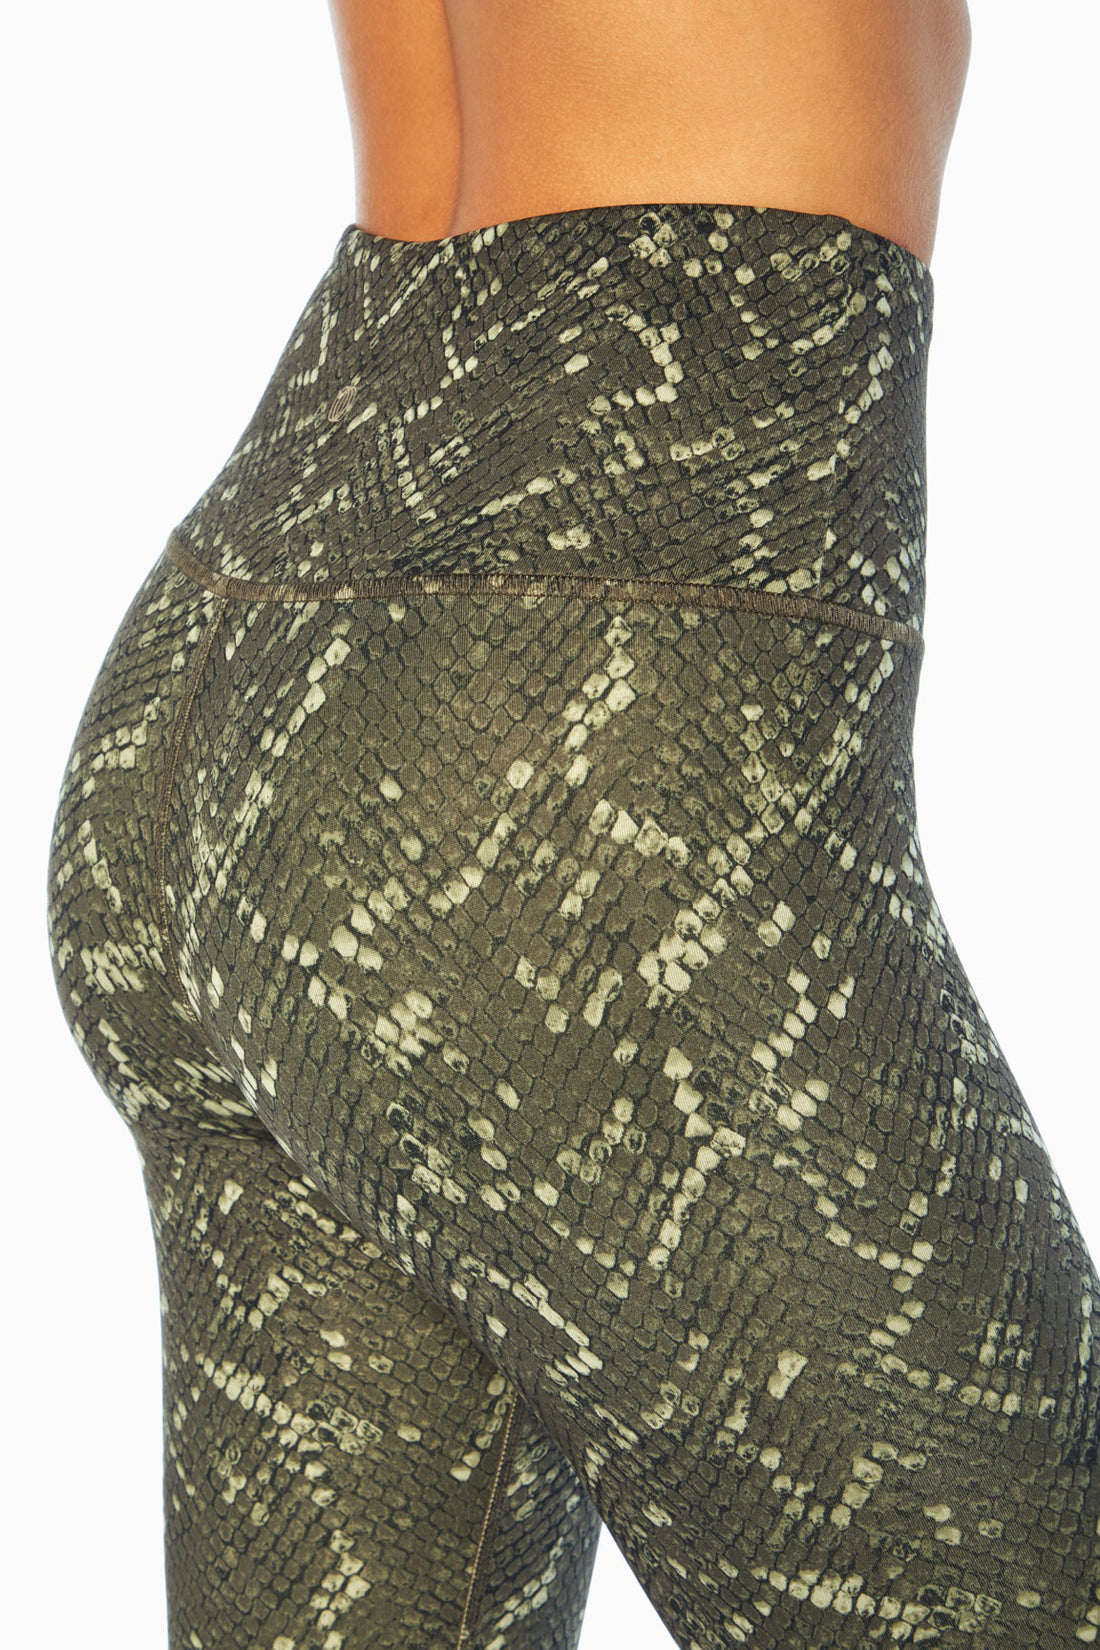 Marika Sport Palm Printed Capri Legging - Olive Night Camouflage (A37)